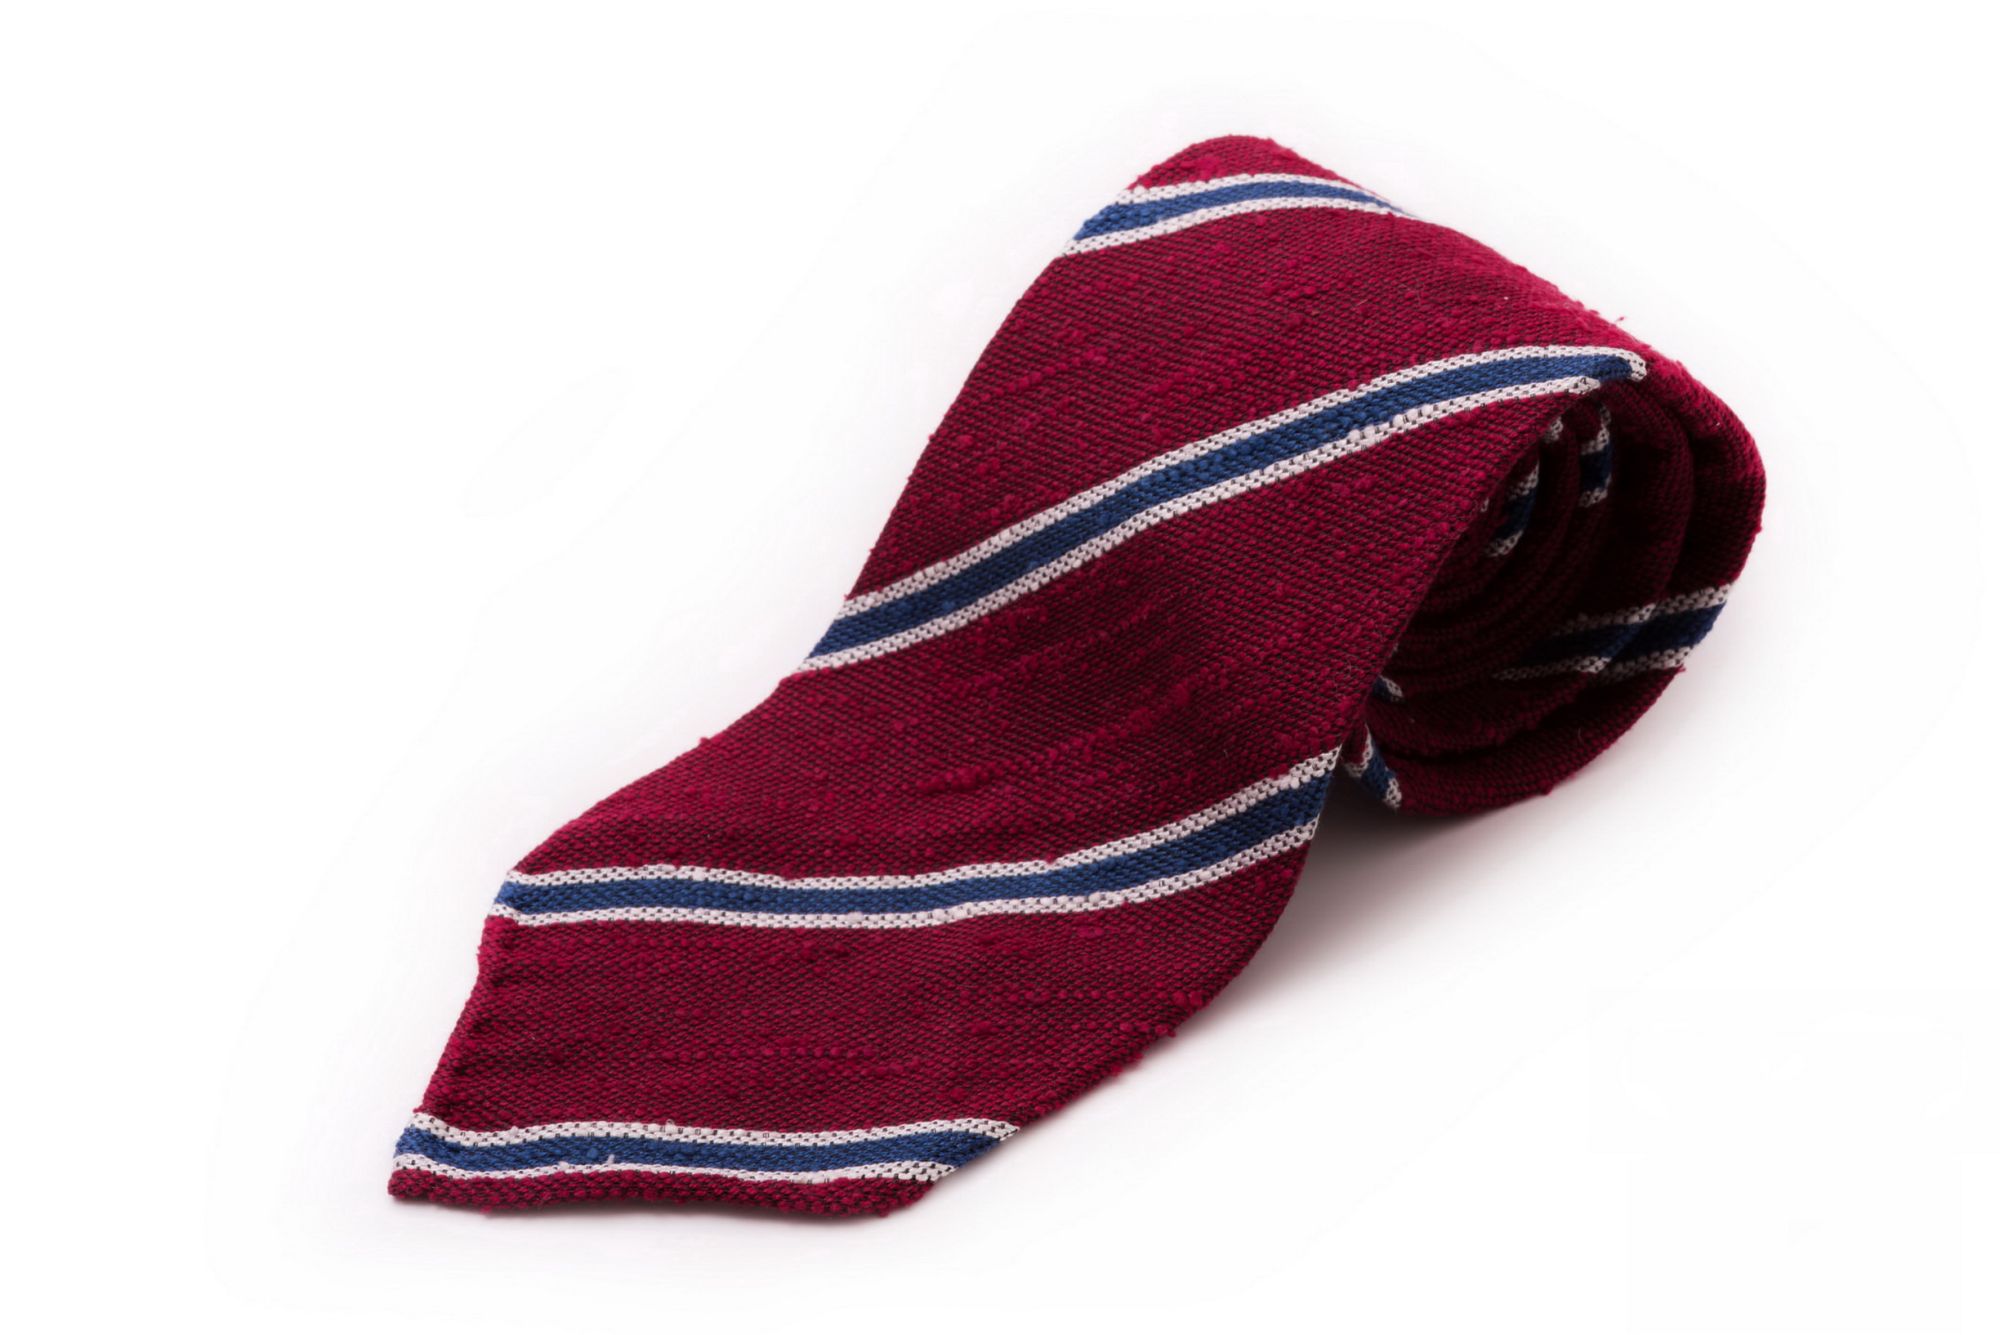 Shantung Striped Dark Red, Blue and White Silk Tie Untipped - Fort Belvedere